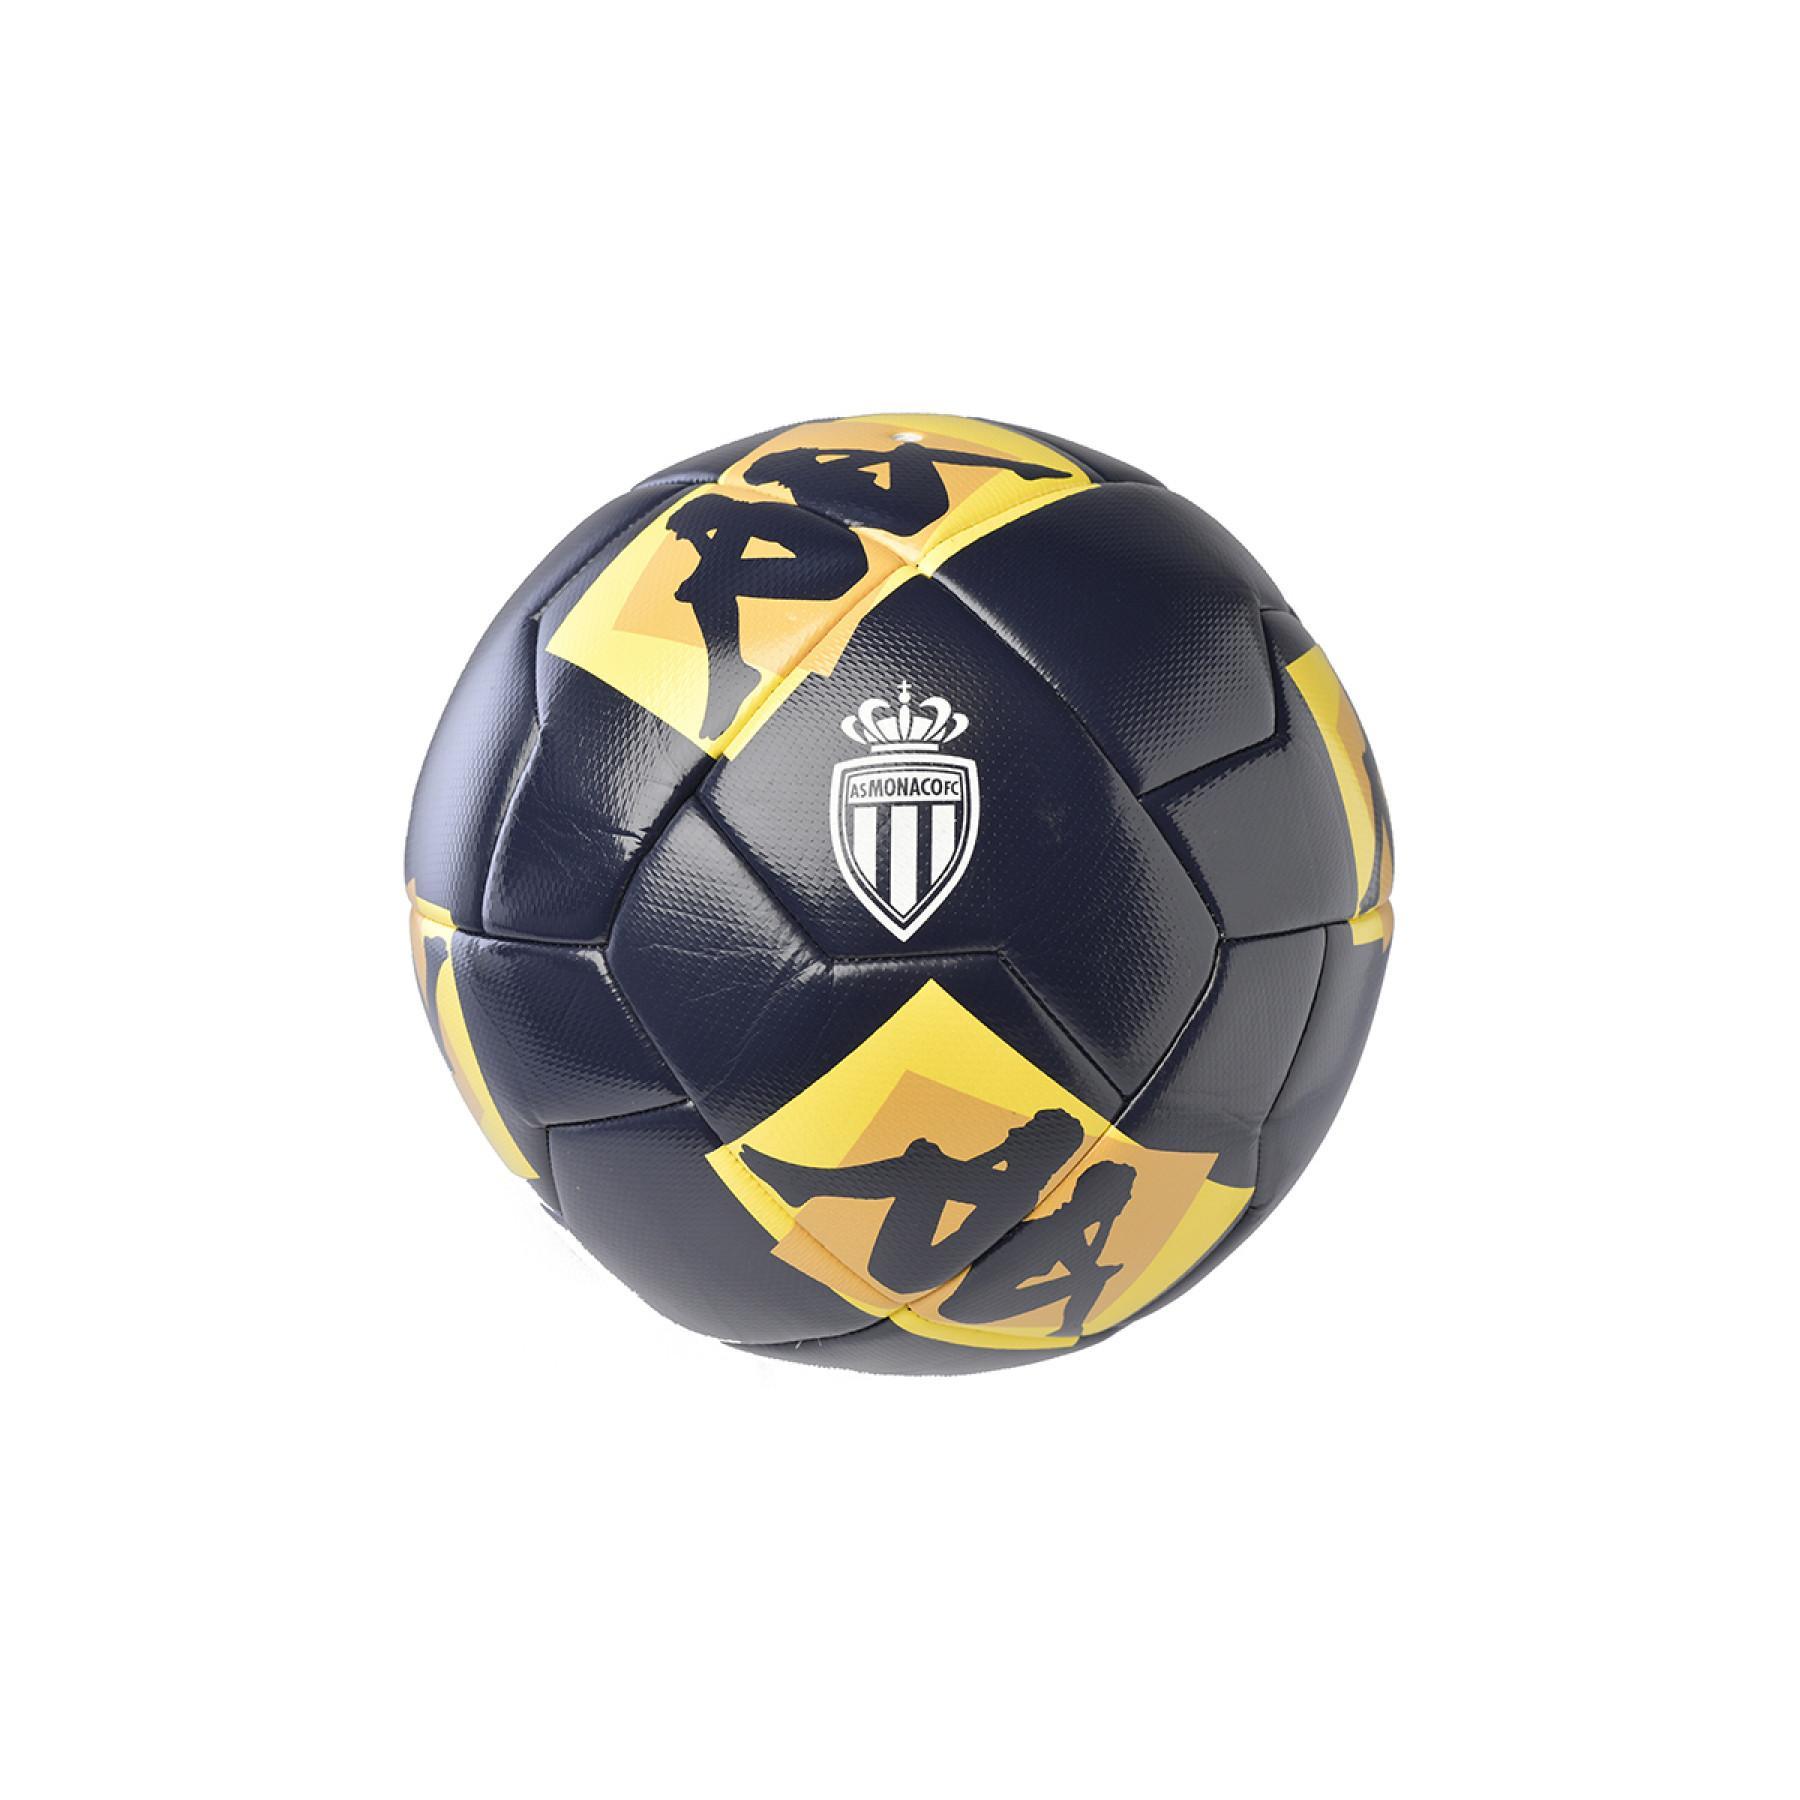 Matchboll AS Monaco 2020/21 20.3G